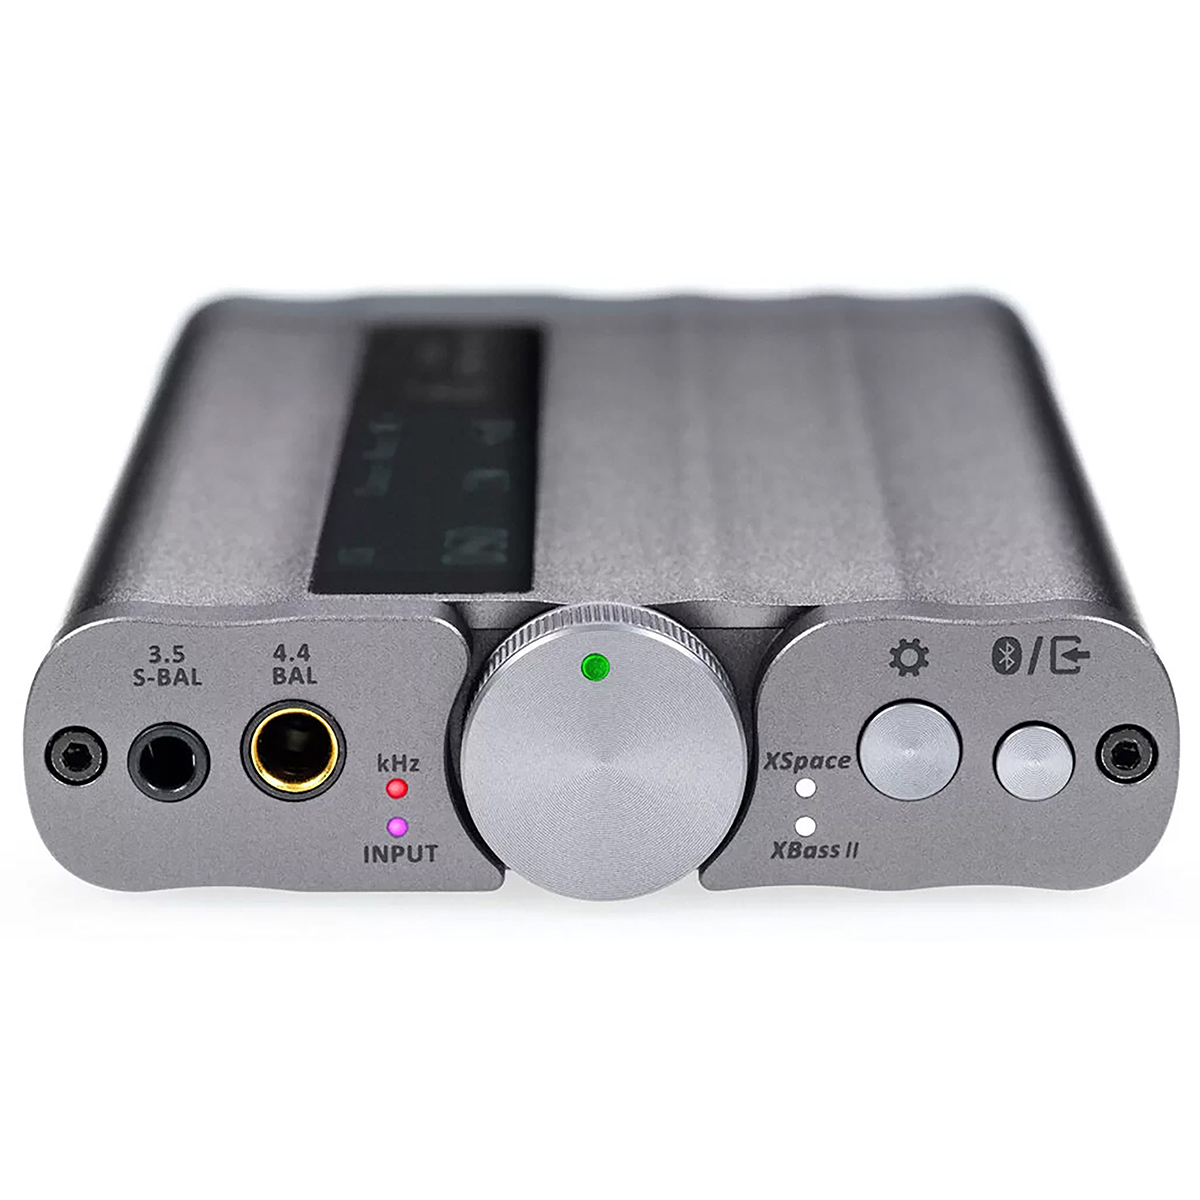 xDSD Gryphon PORTABLE DAC HEADPHONE AMP